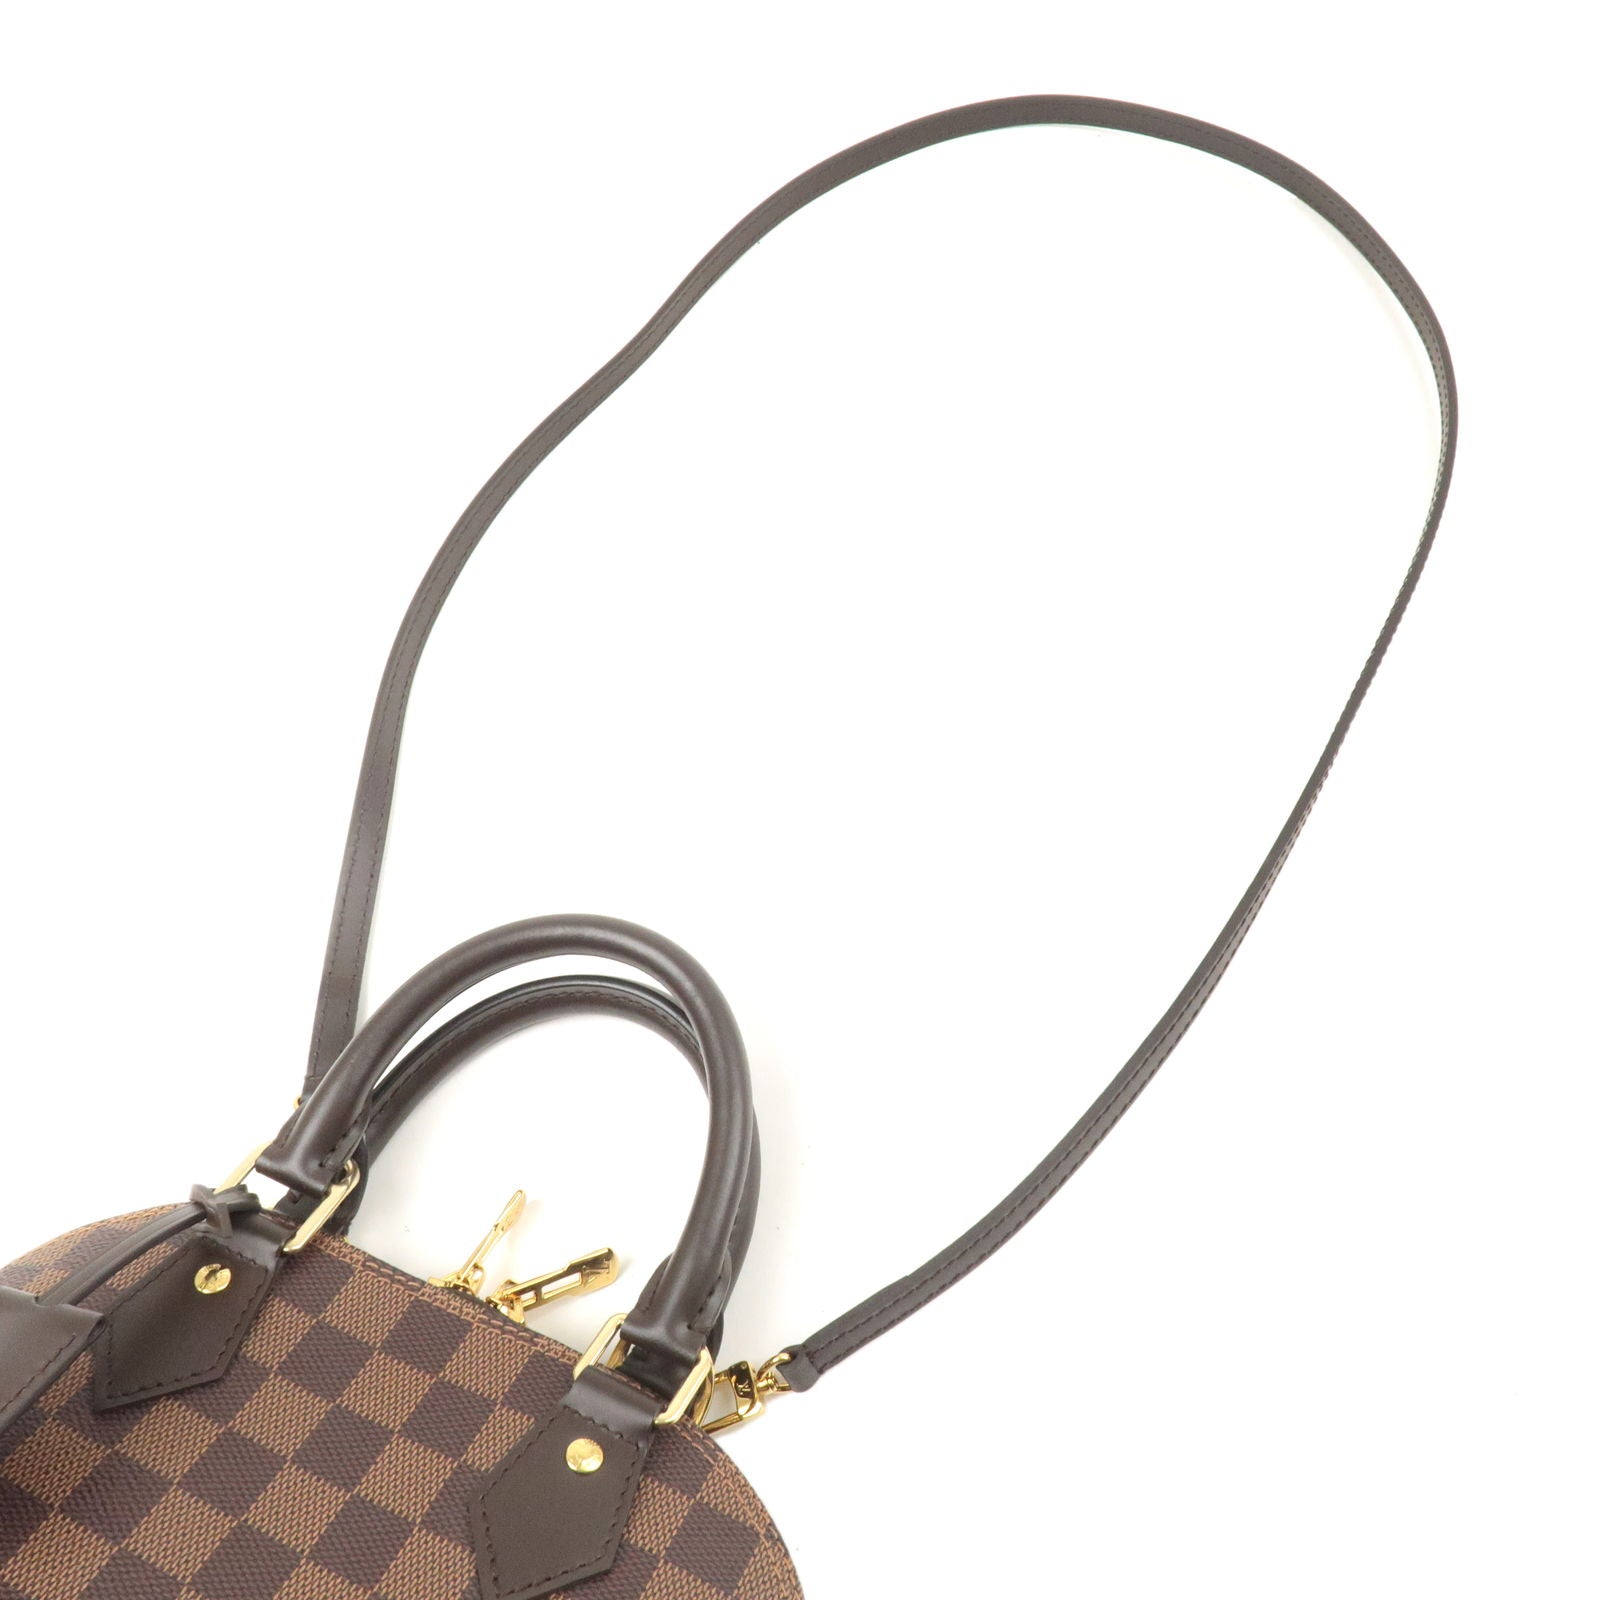 Louis Vuitton Alma BB Damier Ebene Shoulder Bag Brown